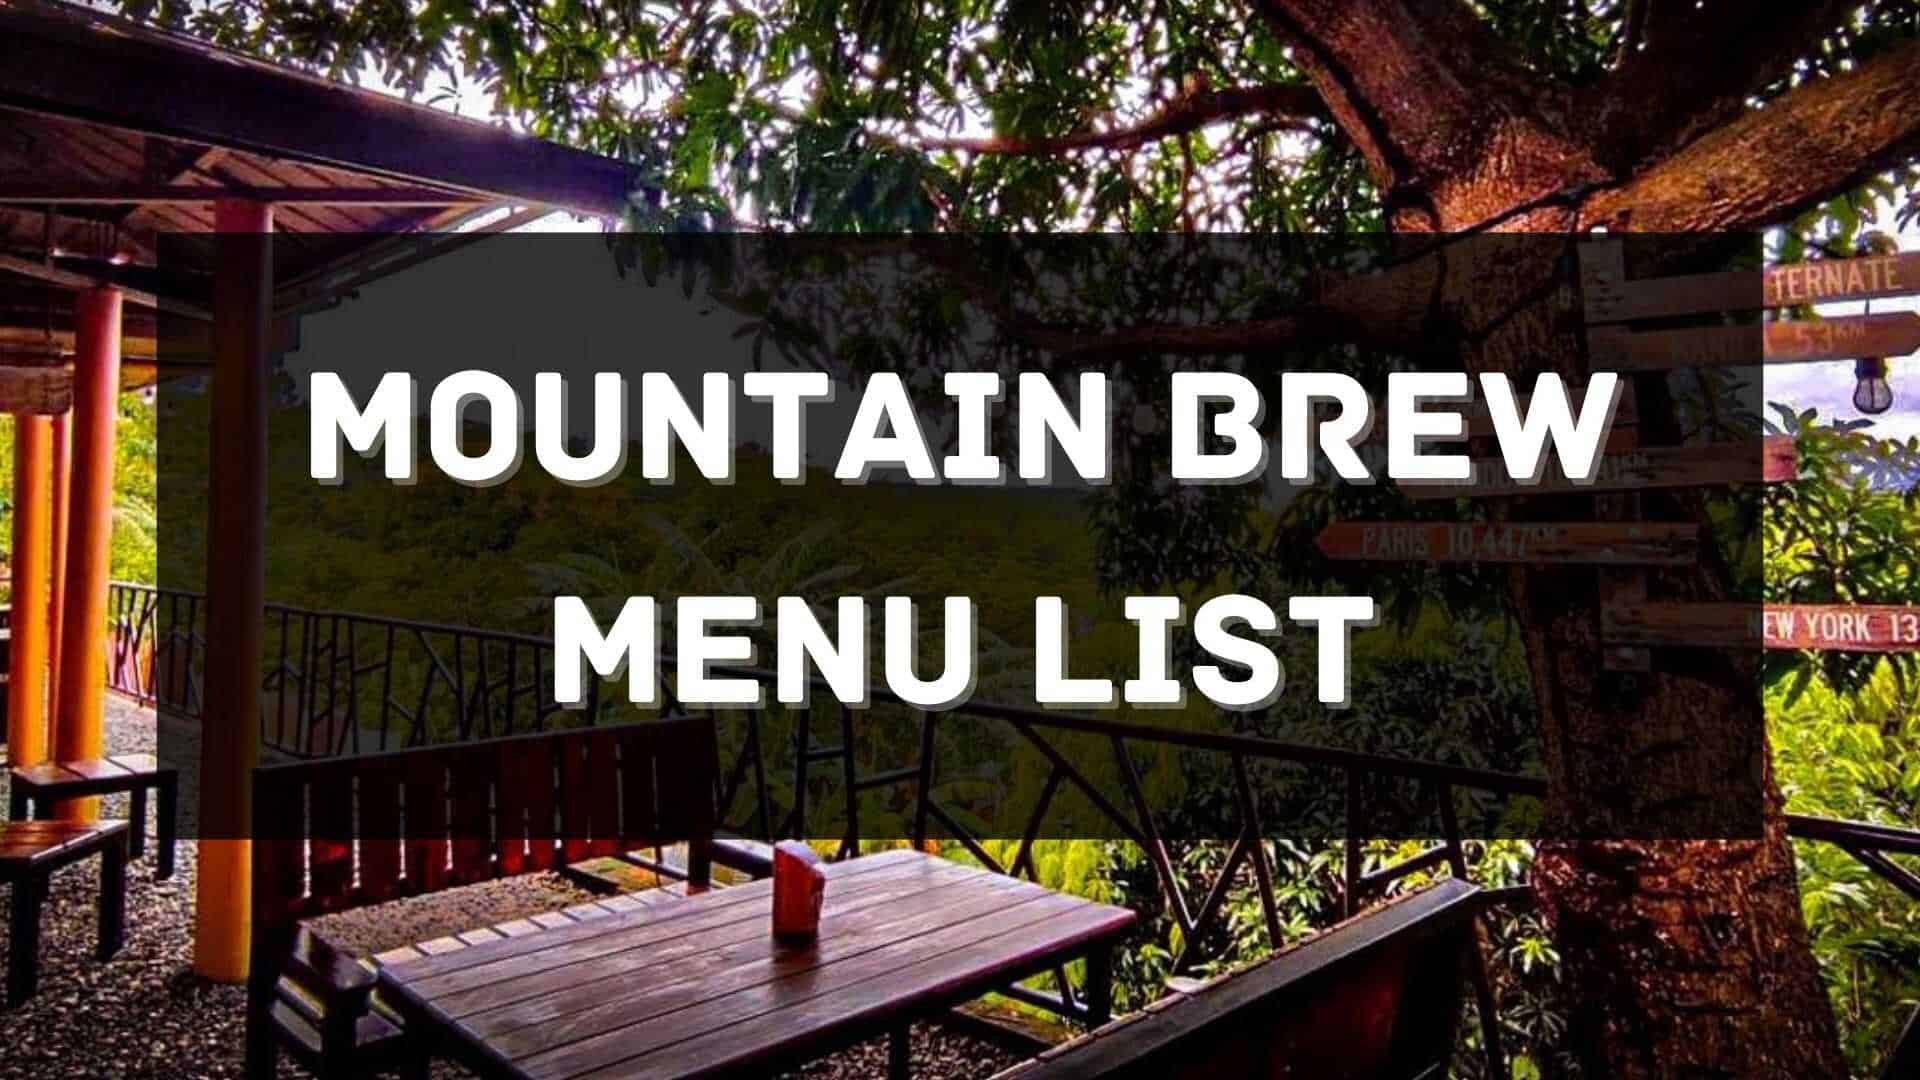 mountain brew menu prices philippines